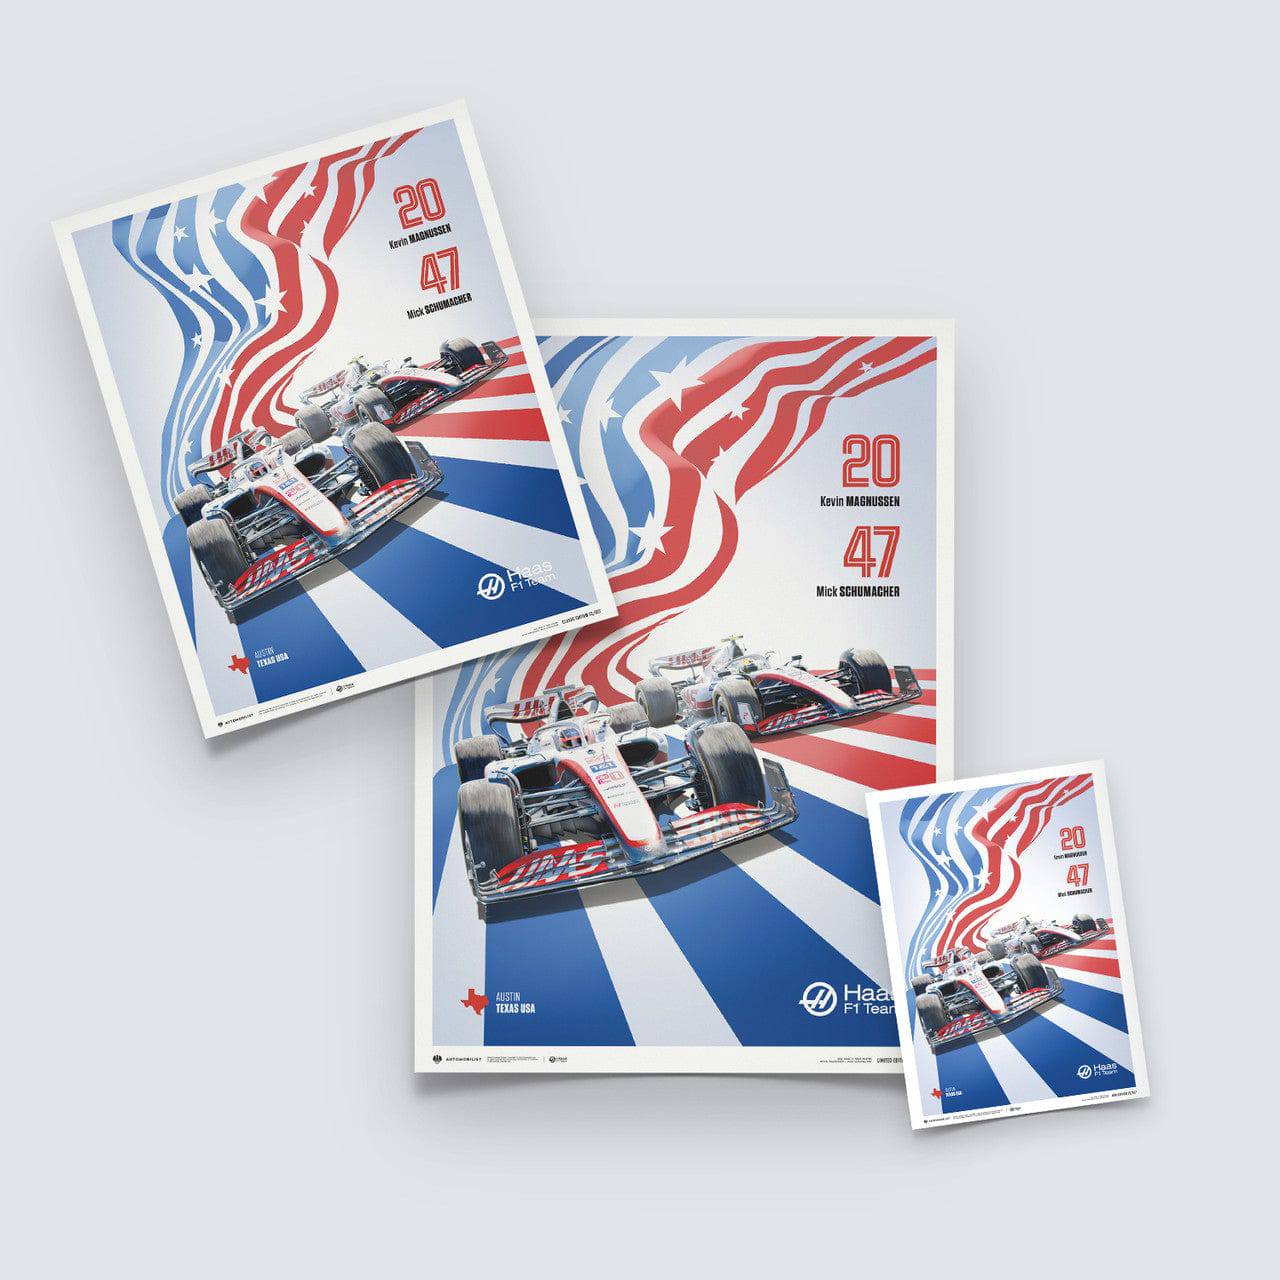 Haas F1 Team - United States Grand Prix - 2022